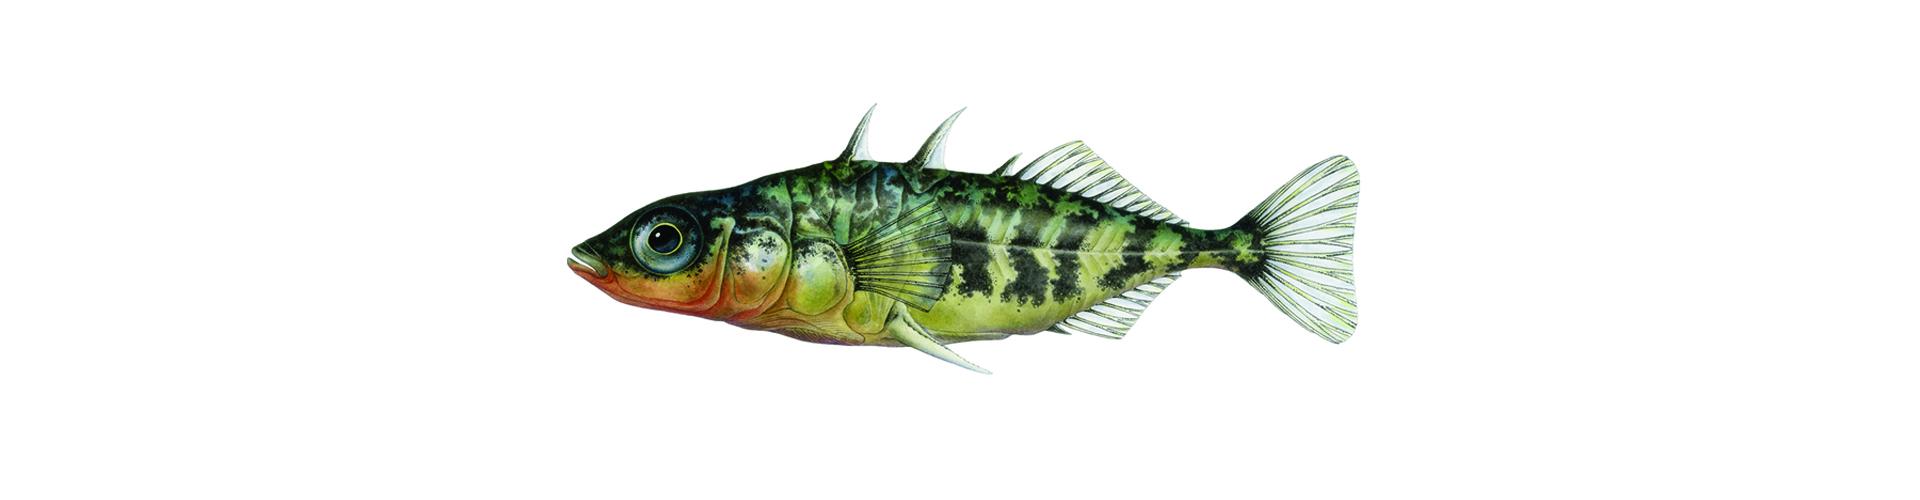 Scientific colored illustration of a green fish.